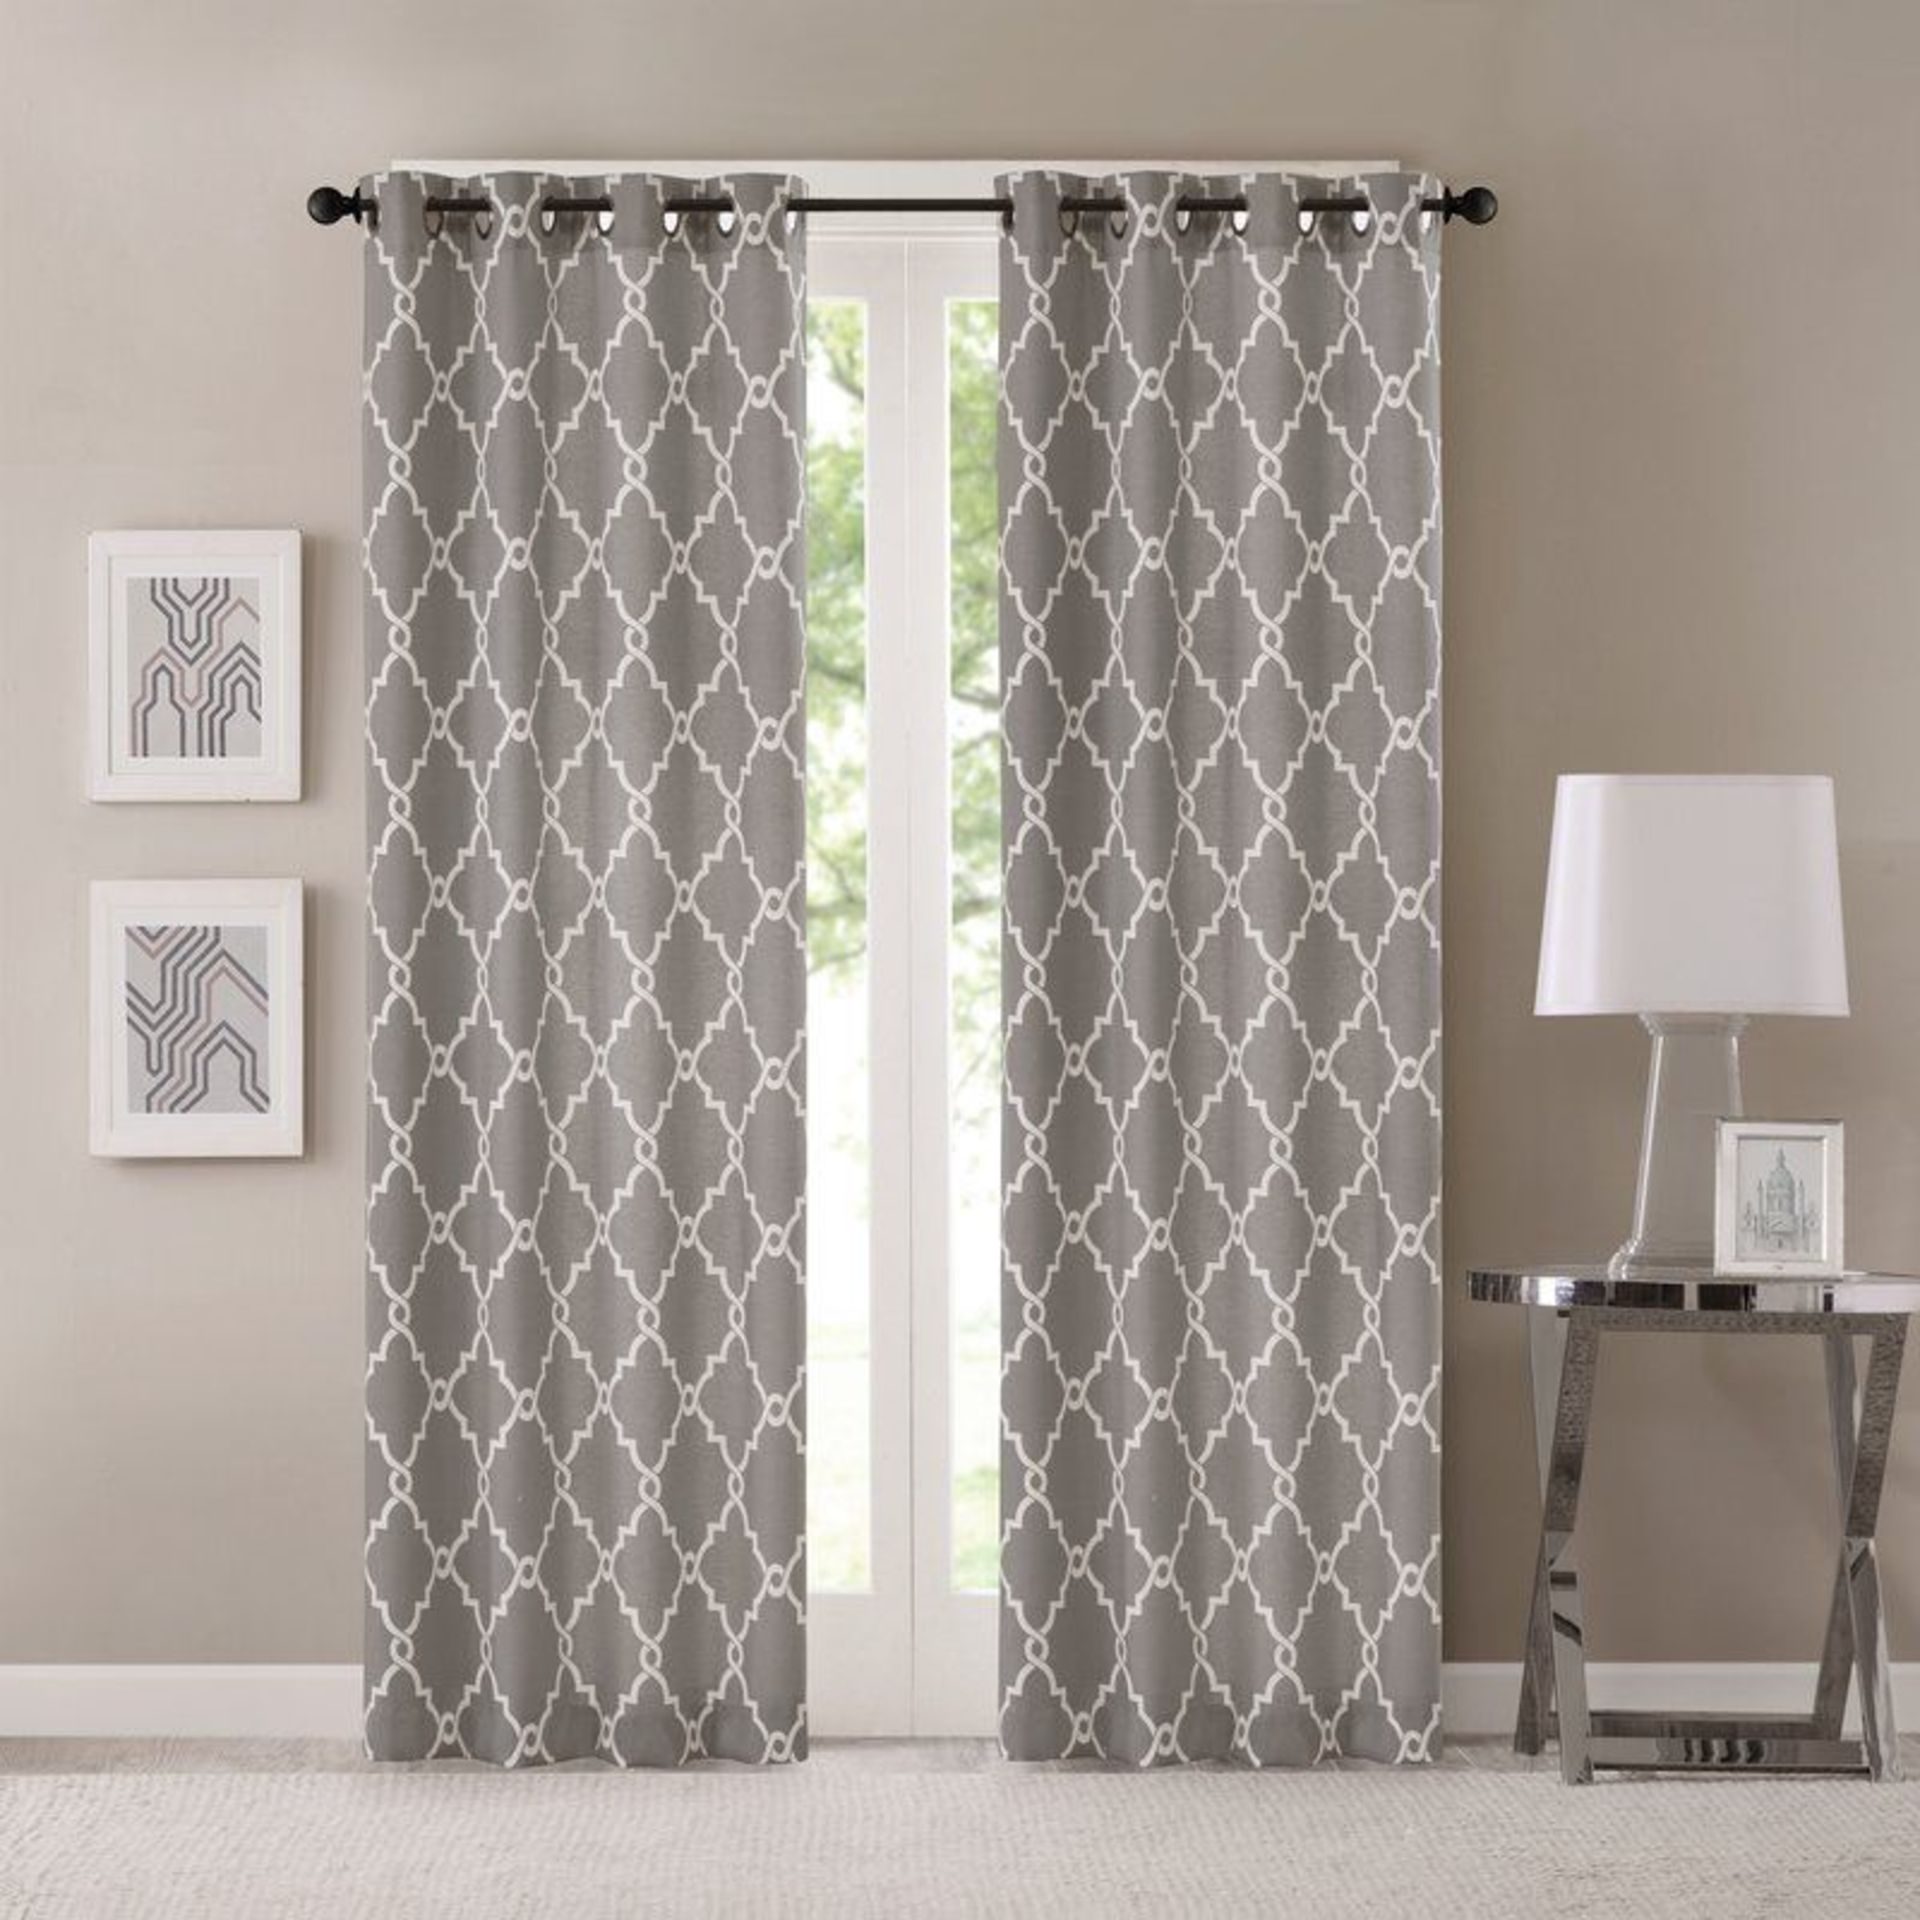 1 x Set of Madison Park Saratoga Grey Curtains 46x54"/117x137cm - Product Code MP40-0068UK (Brand